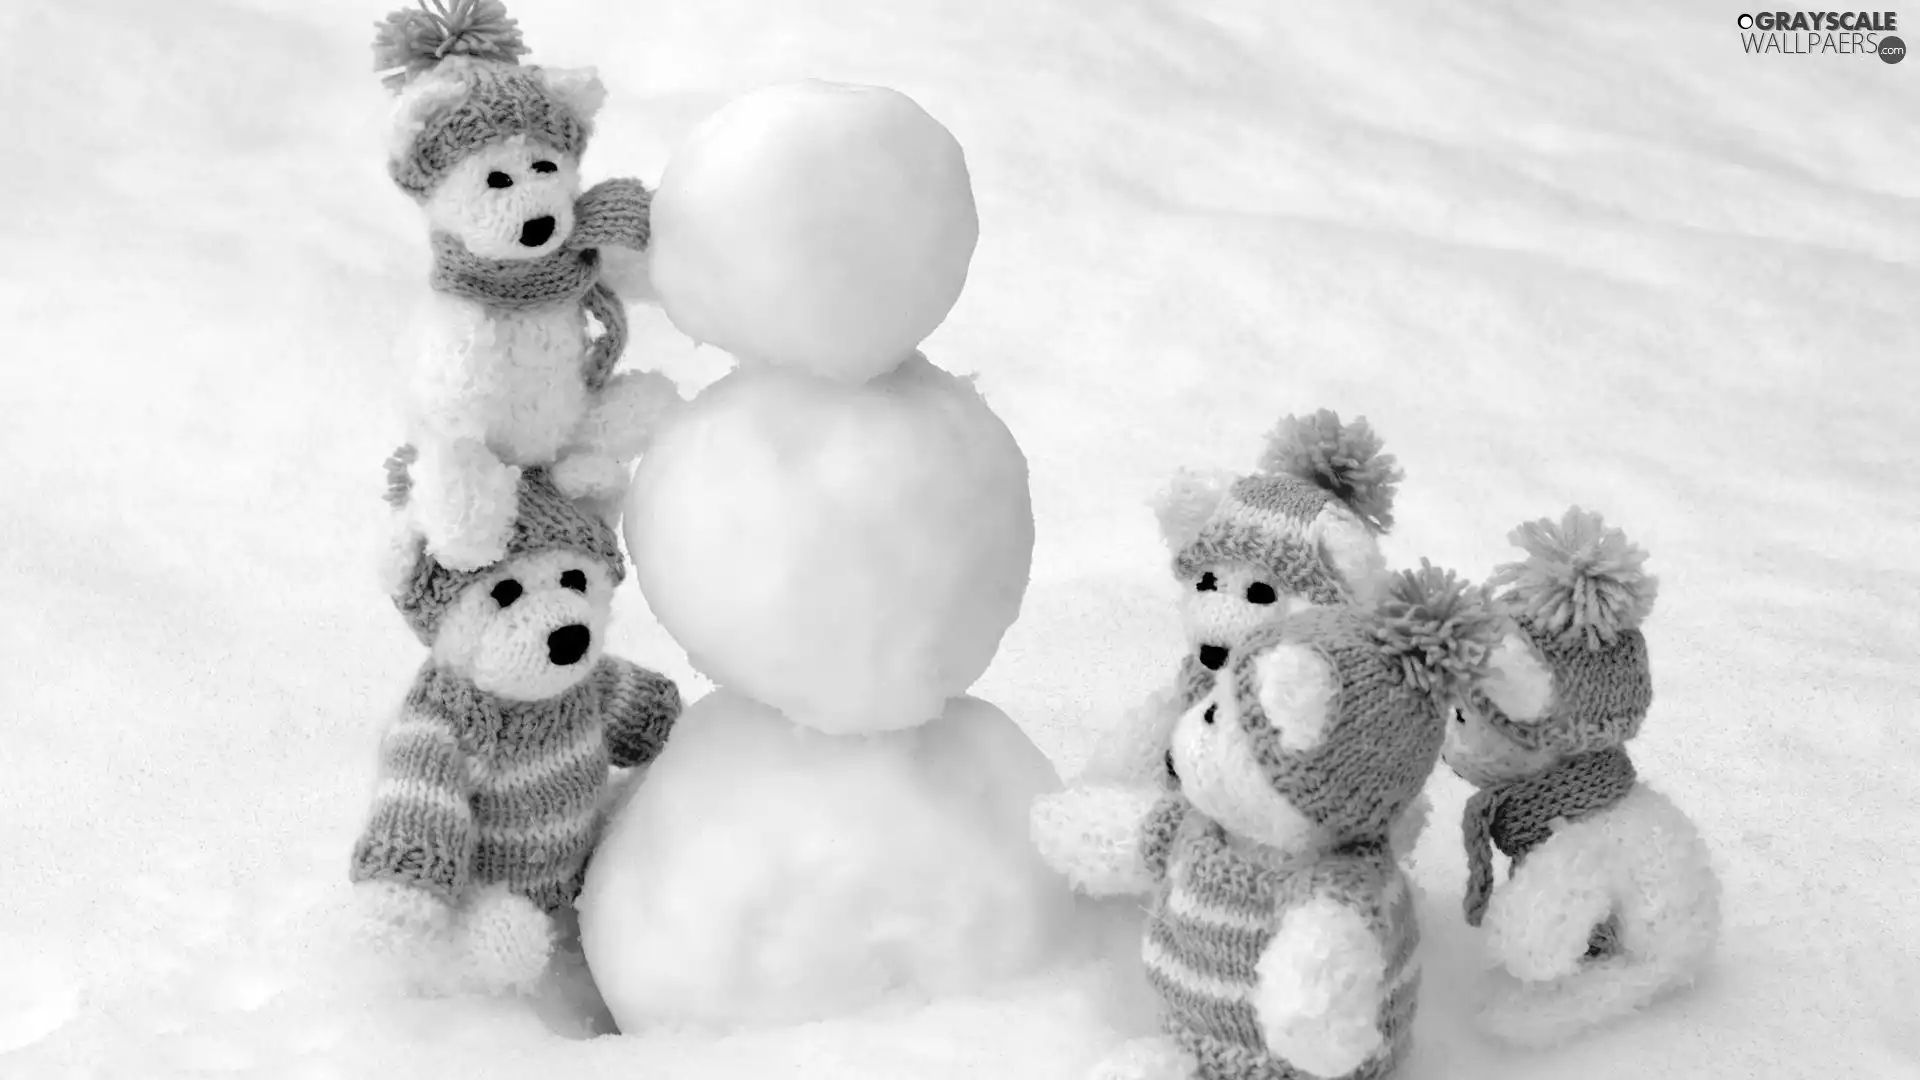 clothes, winter, play, Snowman, hosiery, bear